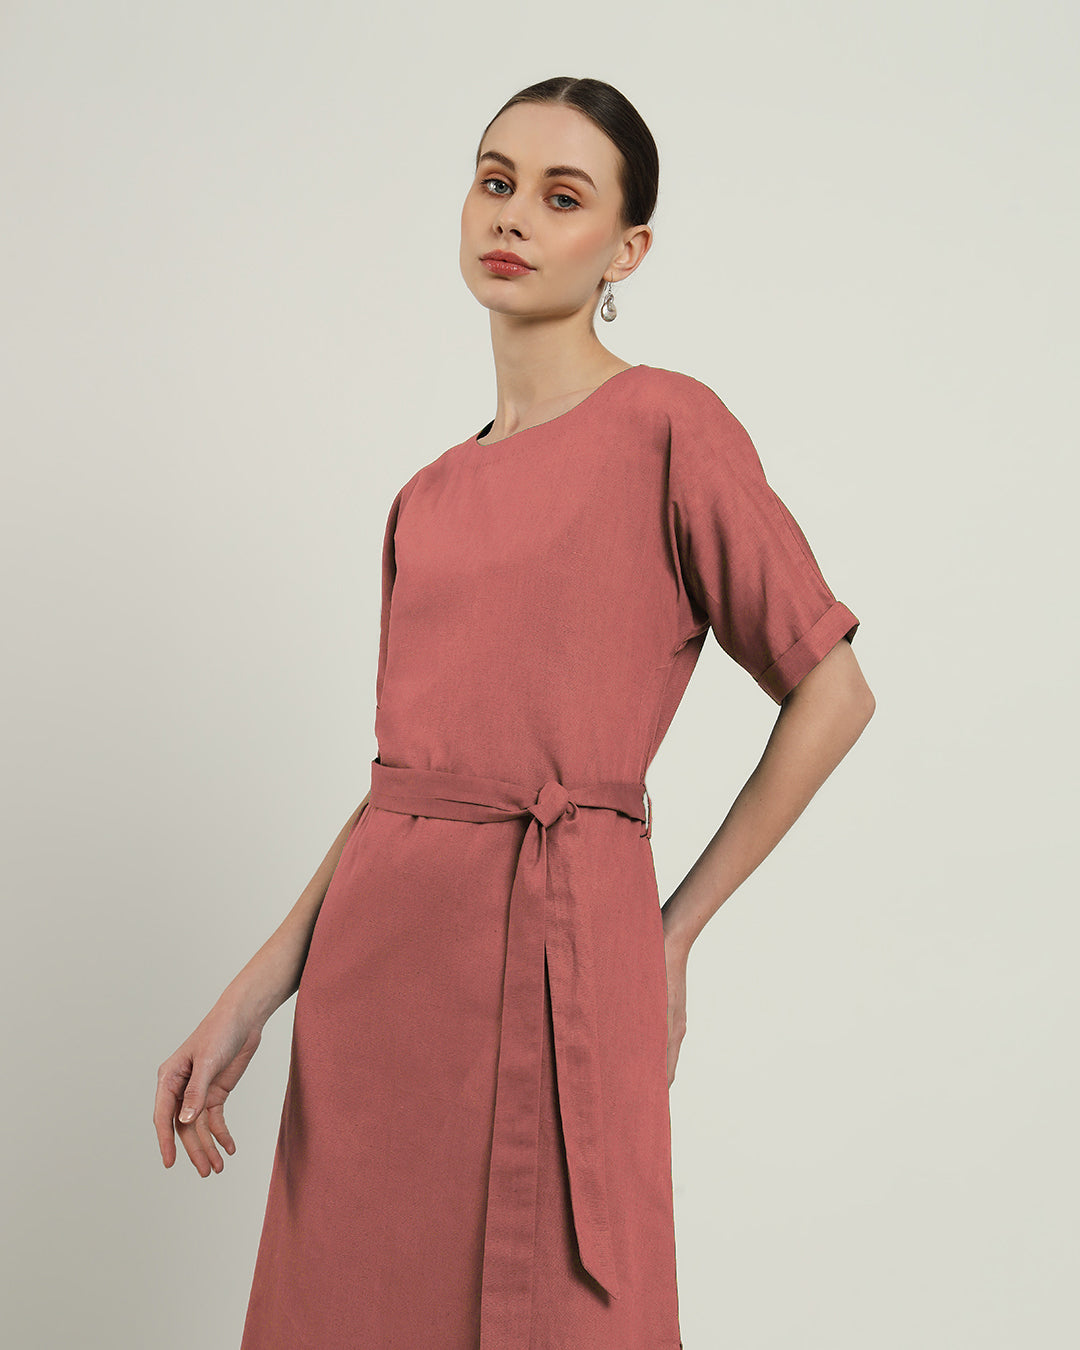 The Tayma Ivory Pink Cotton Dress